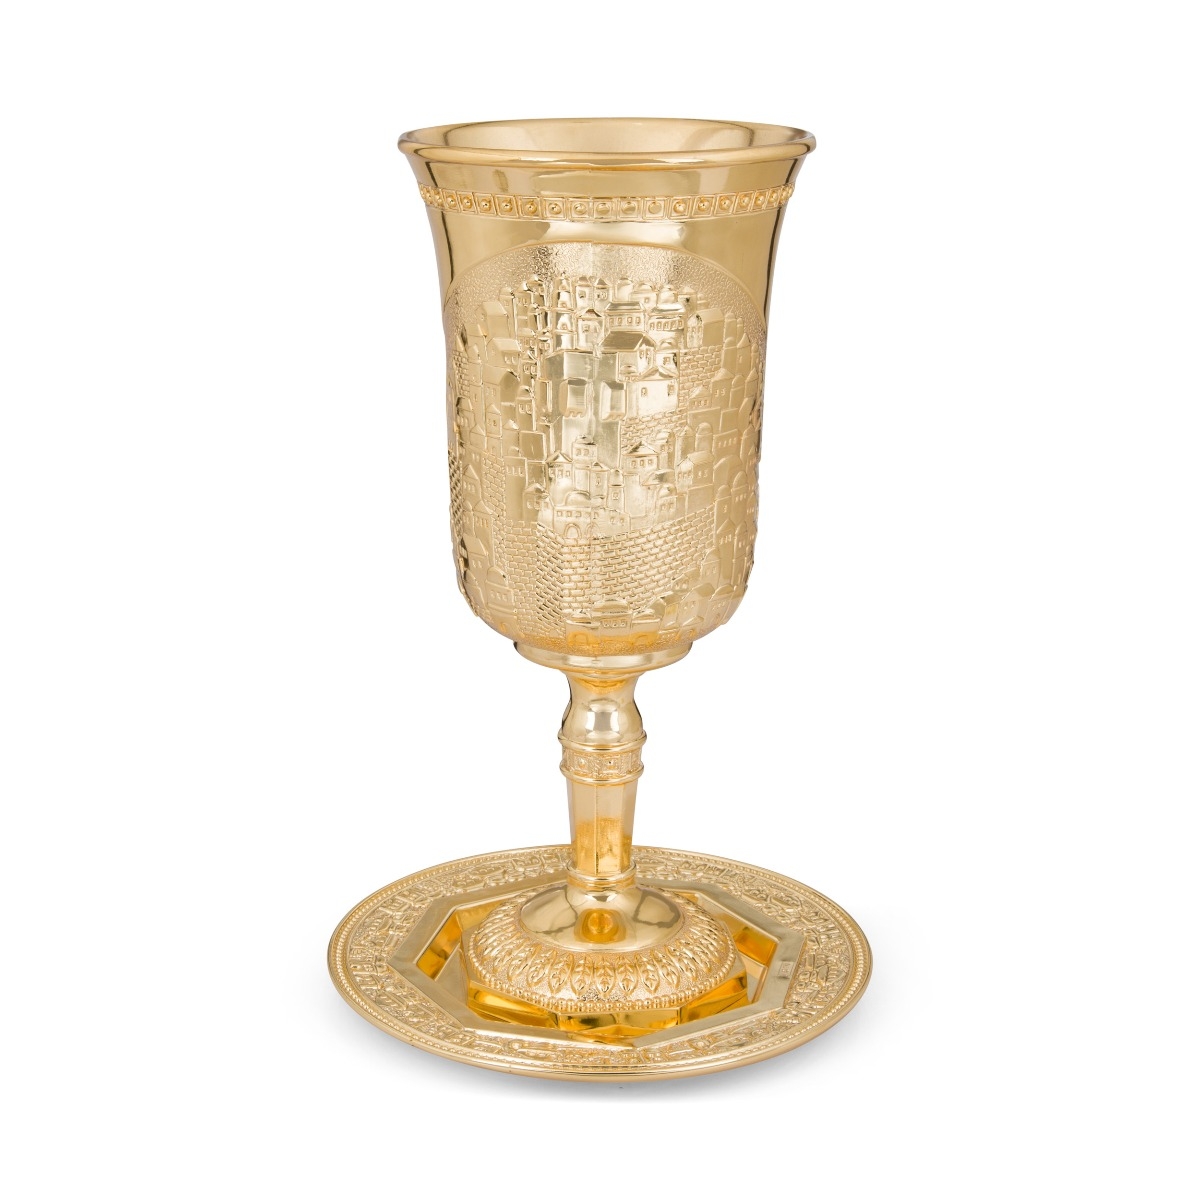 Gold Plated Jerusalem Elijah's Cup with Saucer - 1